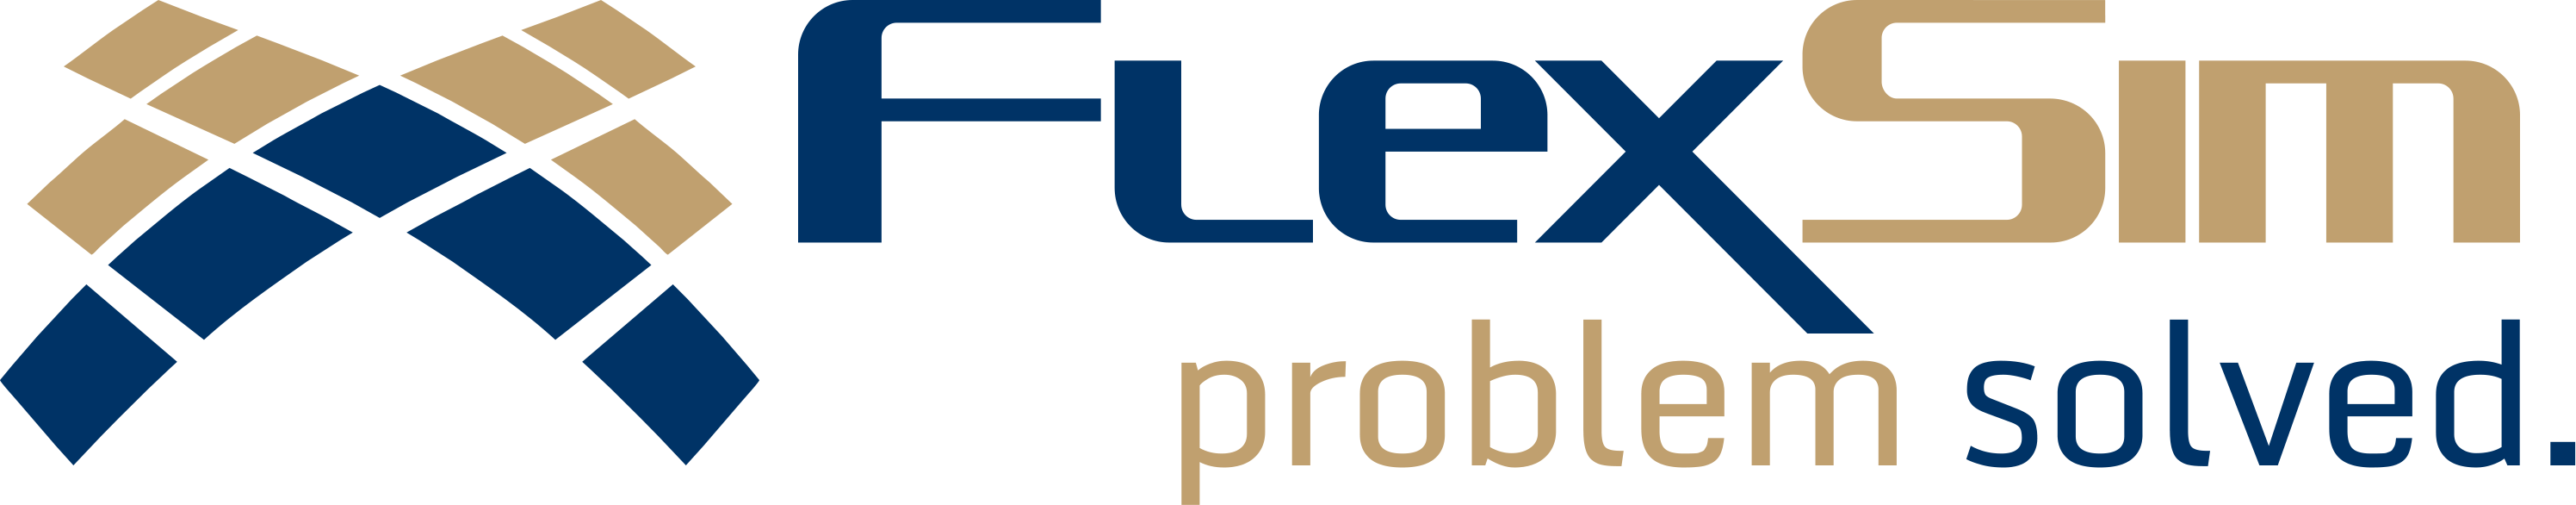 FlexSim problem solved